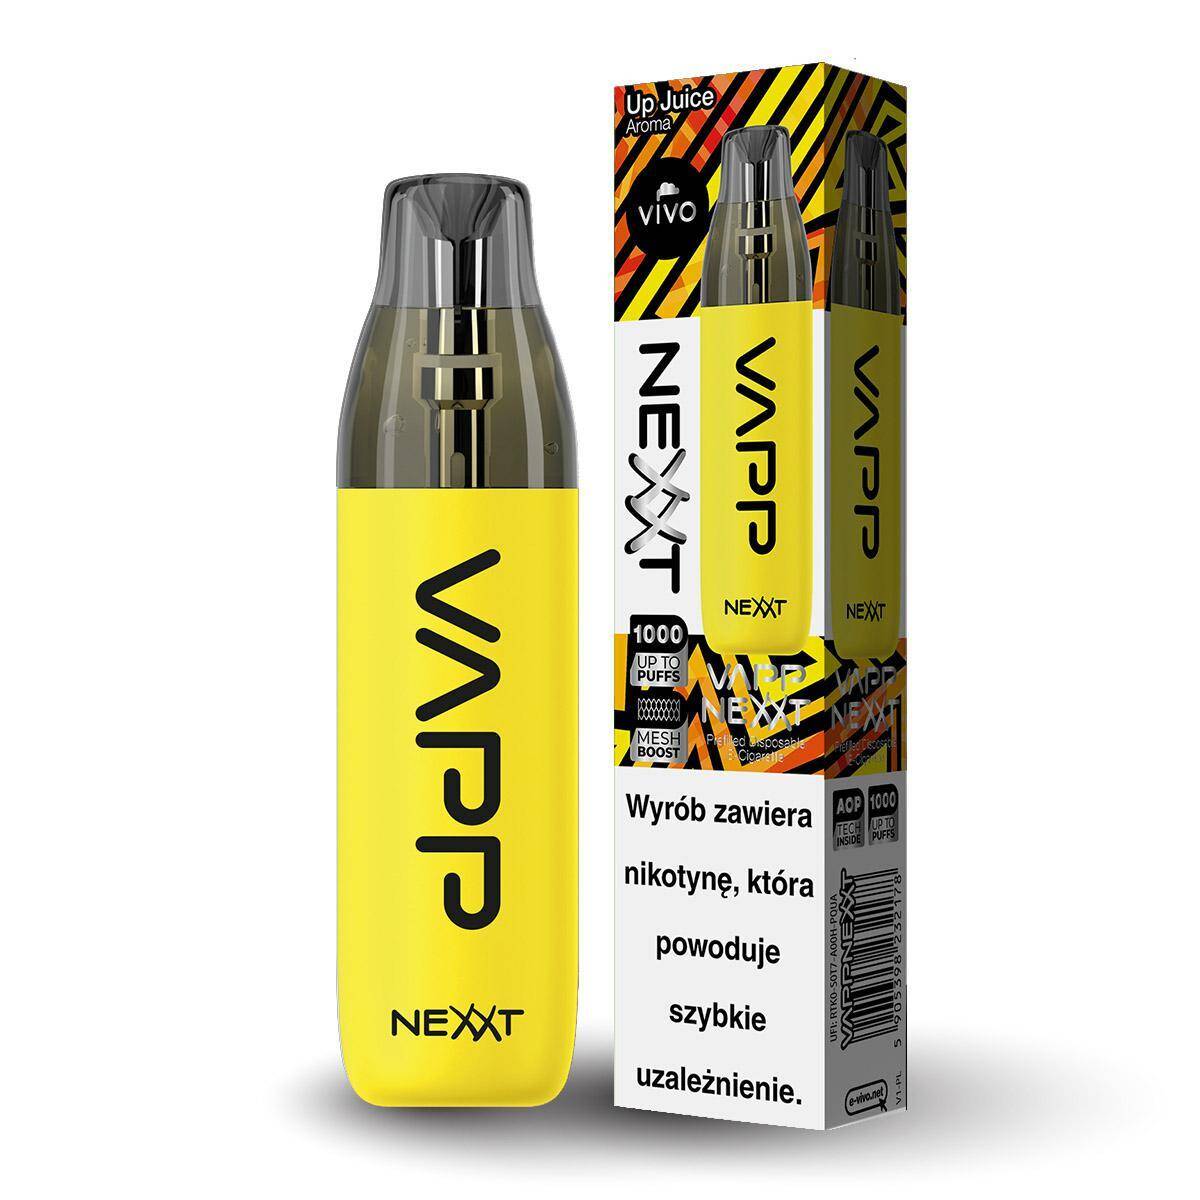 Disposable e-cigarette VIVO Nexxt - Up Juice 20mg